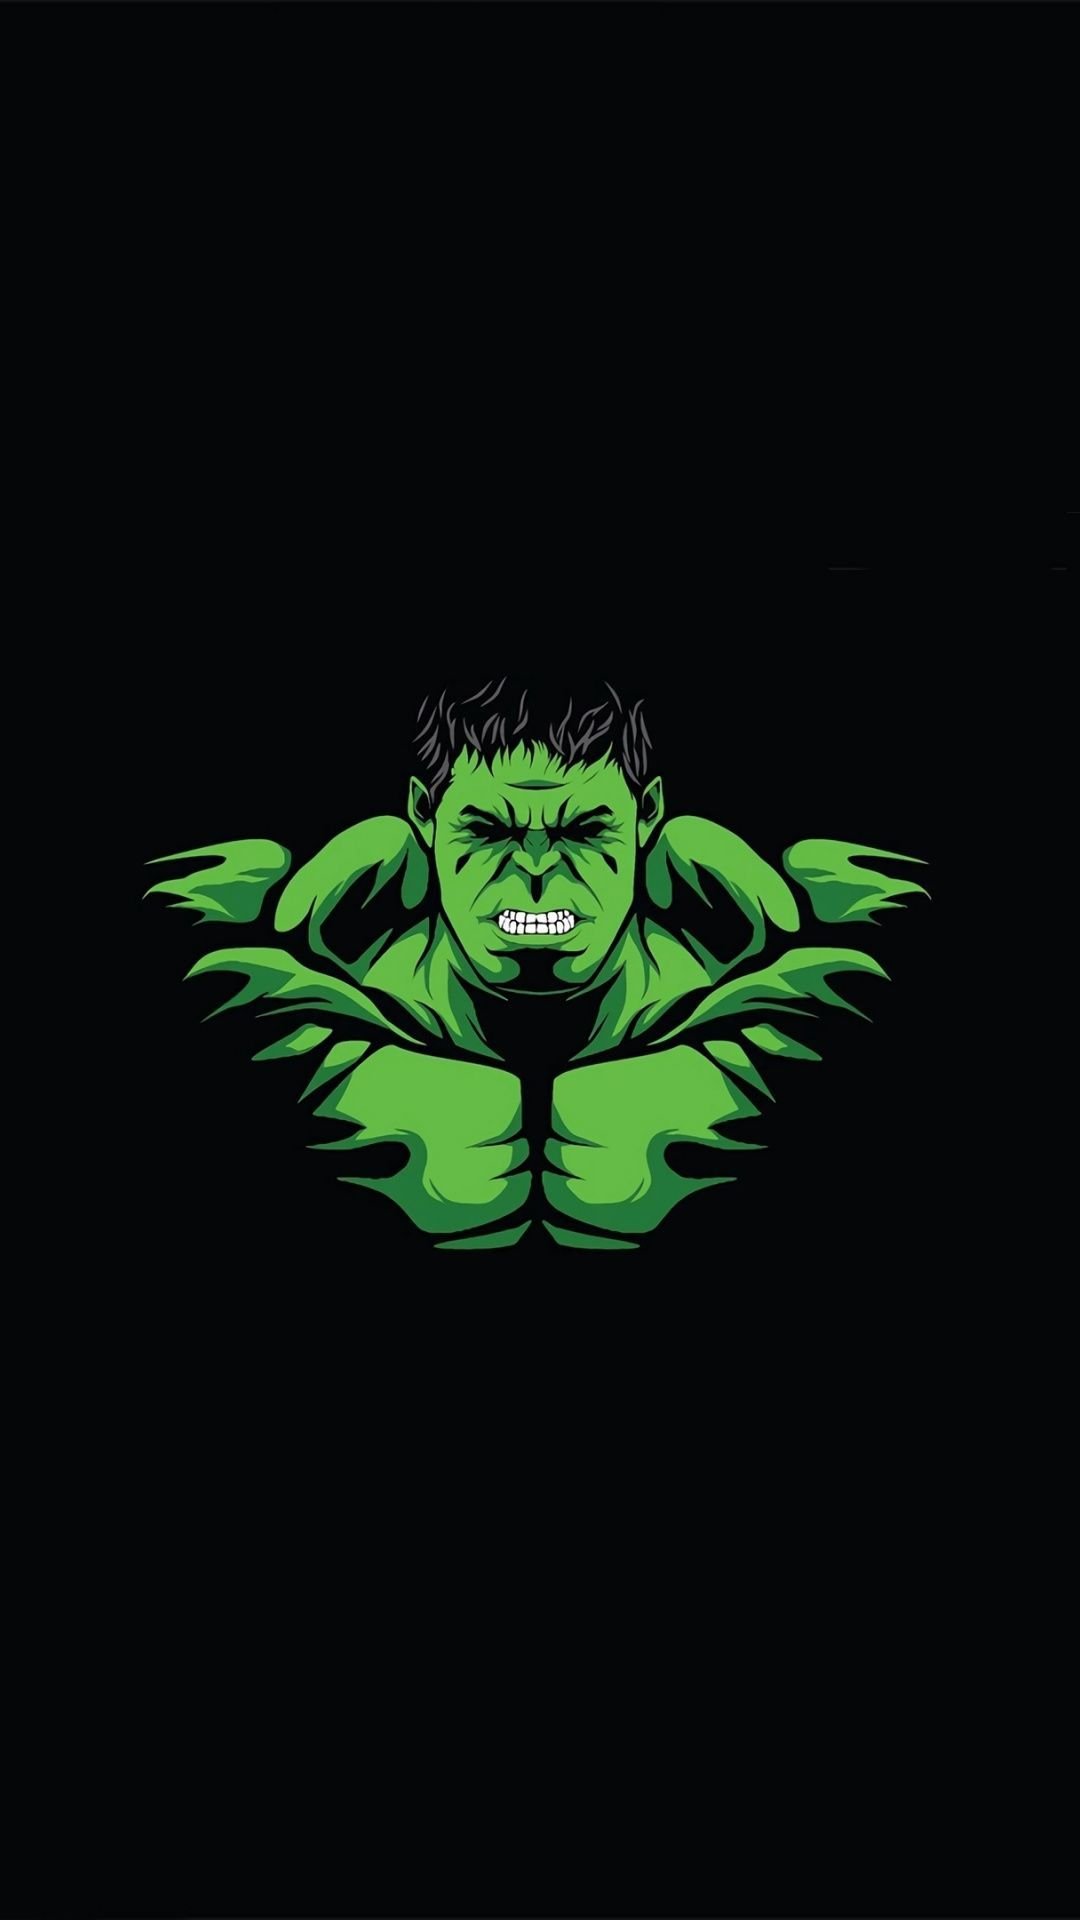 Hulk Android 4k Wallpapers - Wallpaper Cave